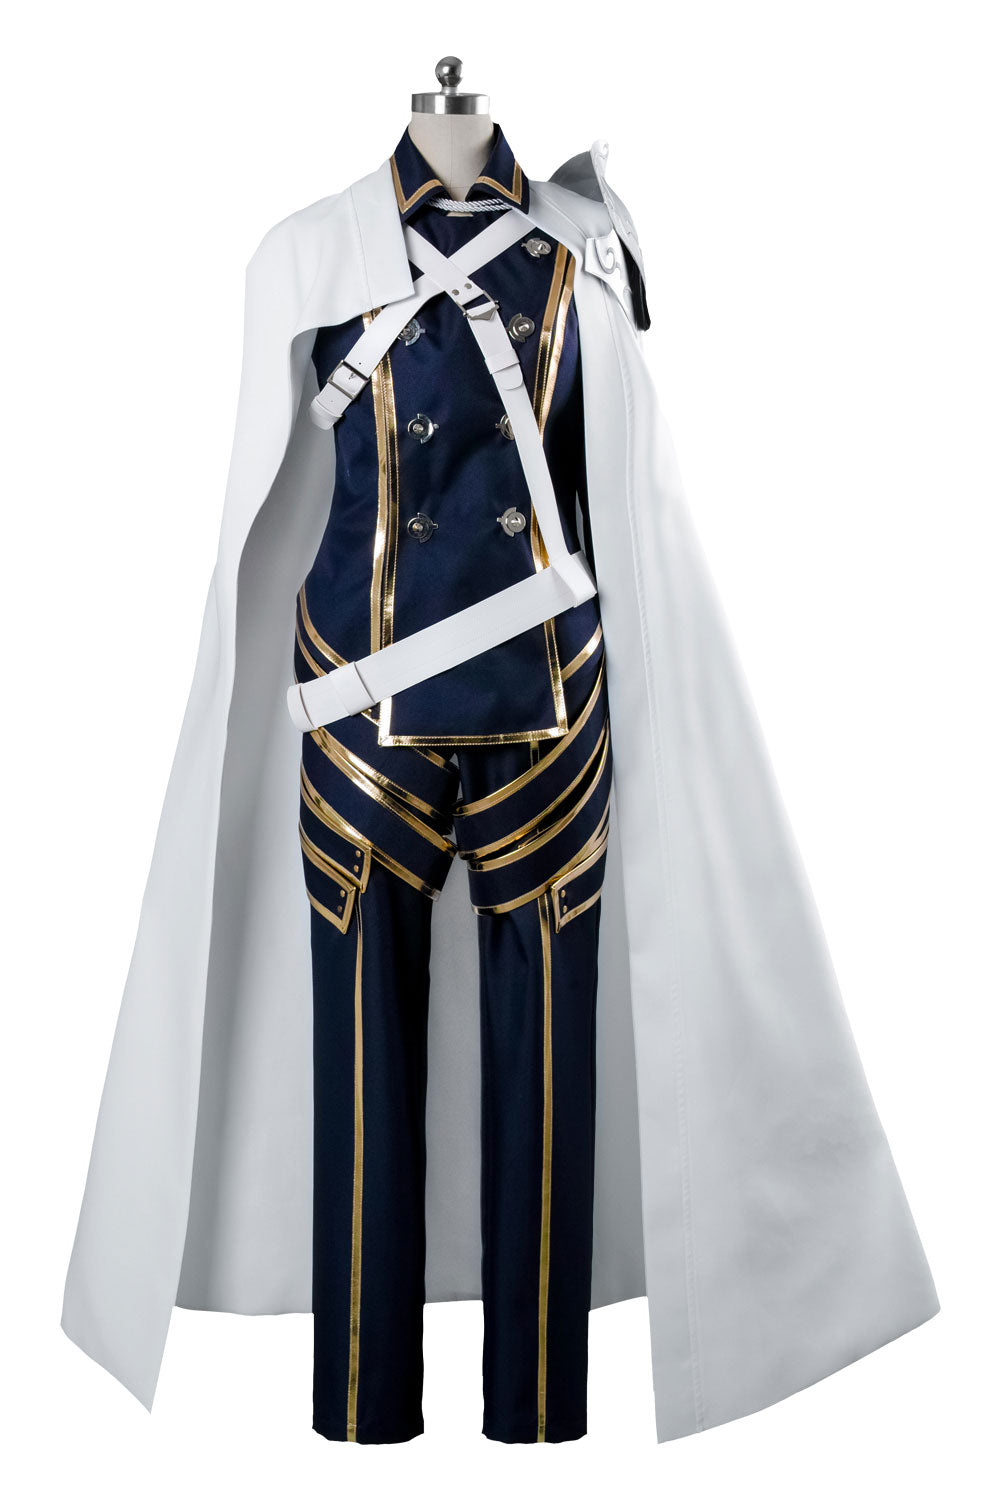 Fire Emblem Awakening Prince Chrom Cosplay Costume